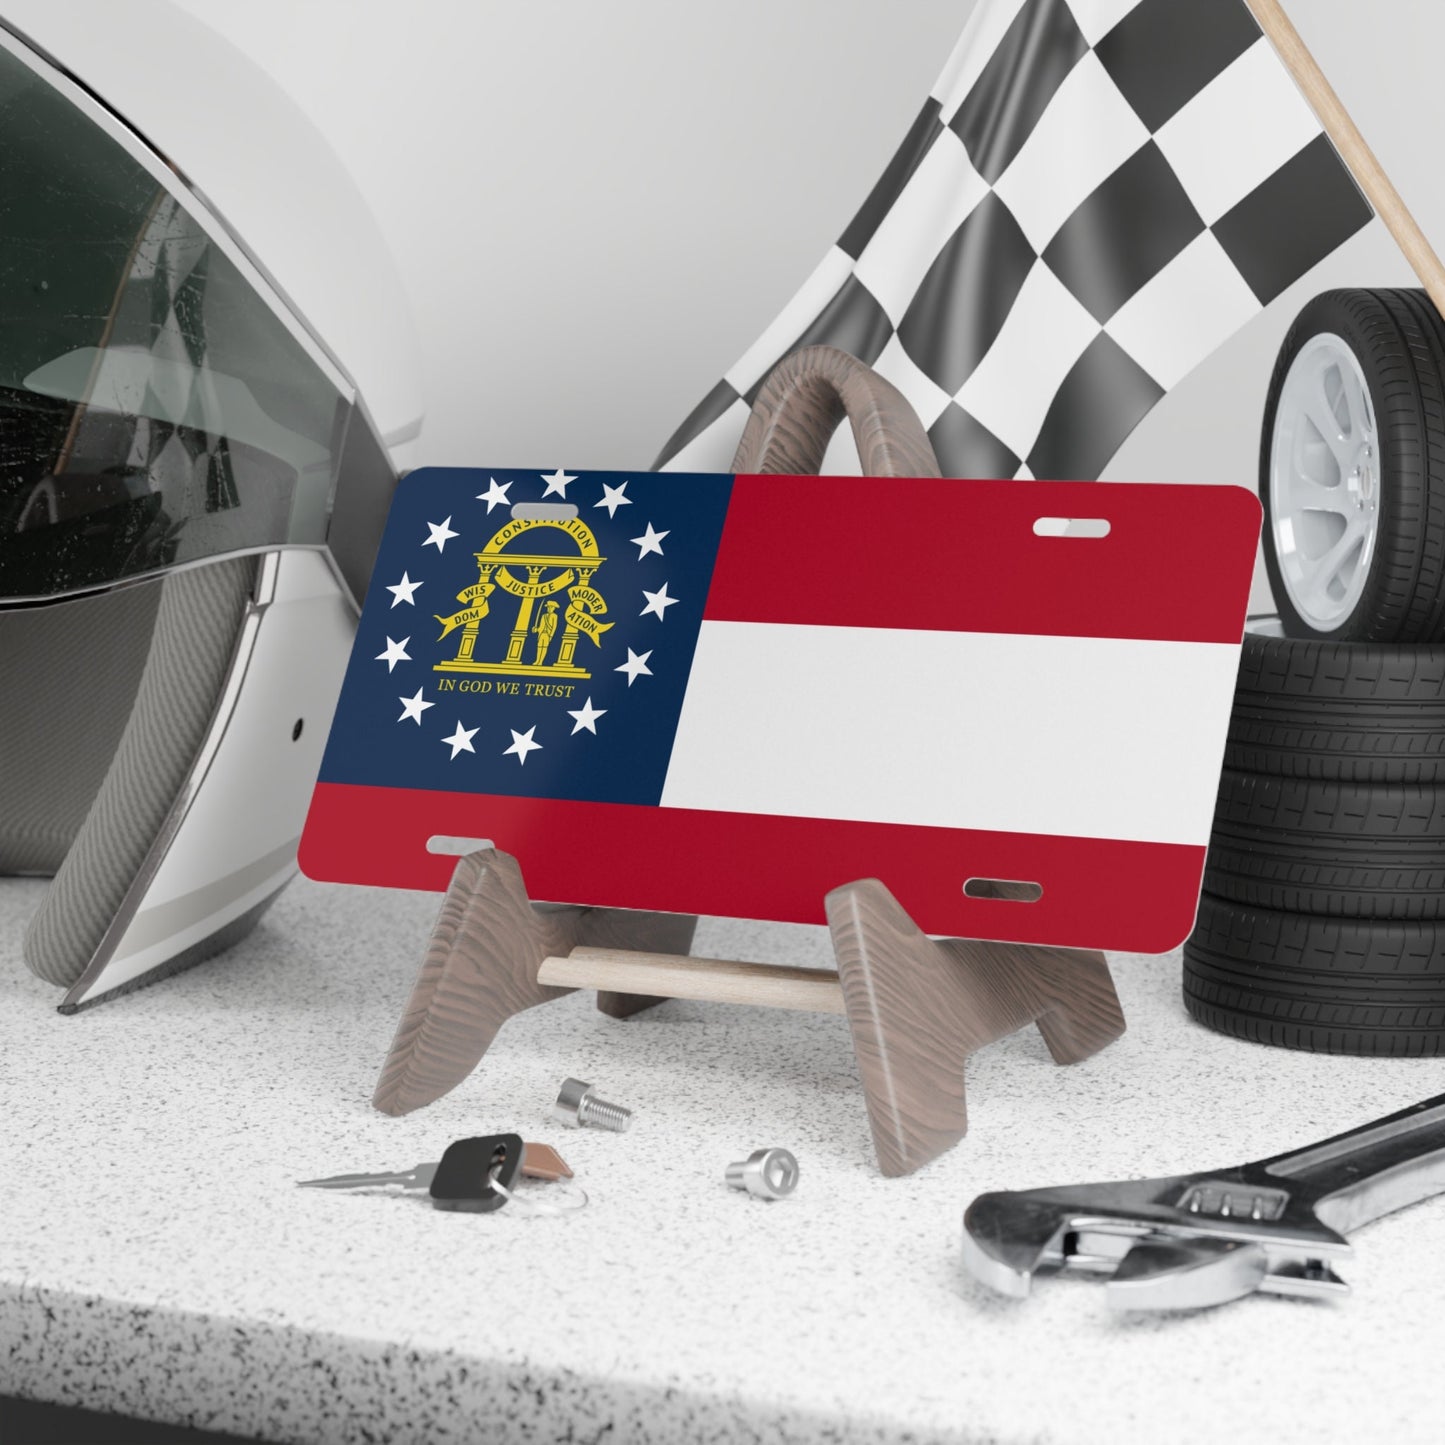 State of Georgia Flag Car Plate tag